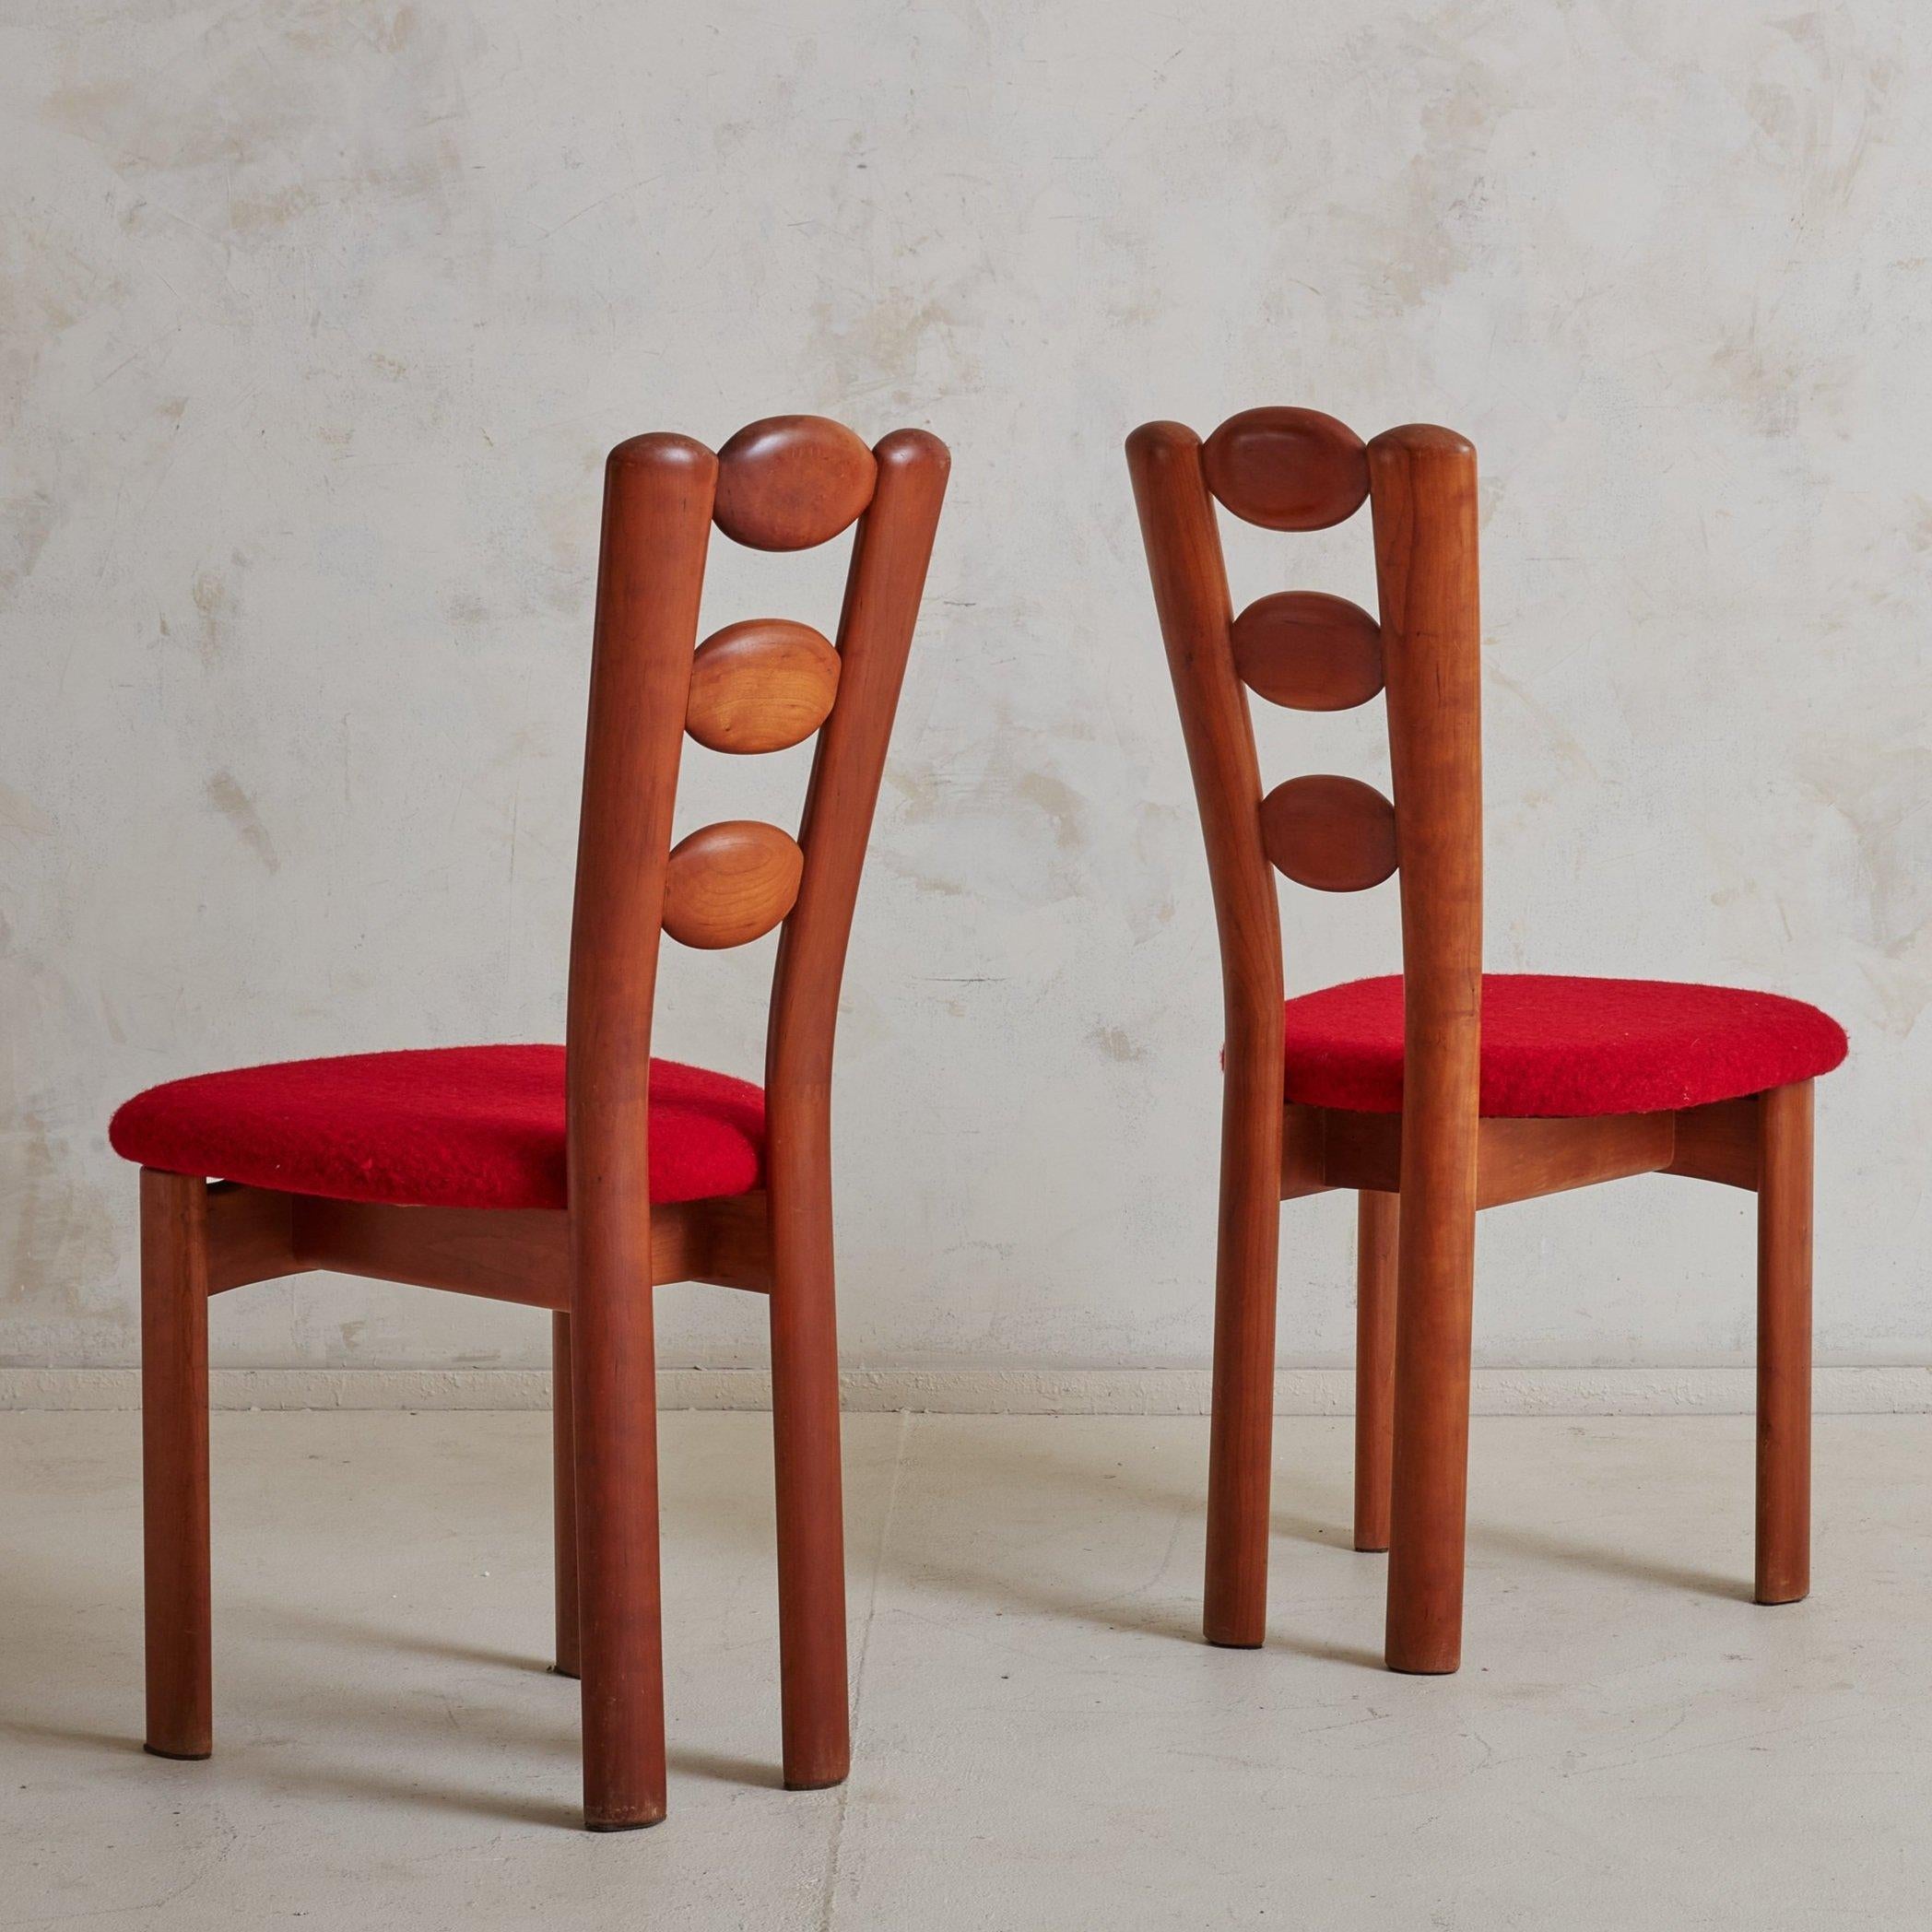 Scandinavian Modern Set of 4 Teak Dining Chairs, Denmark 1960s For Sale